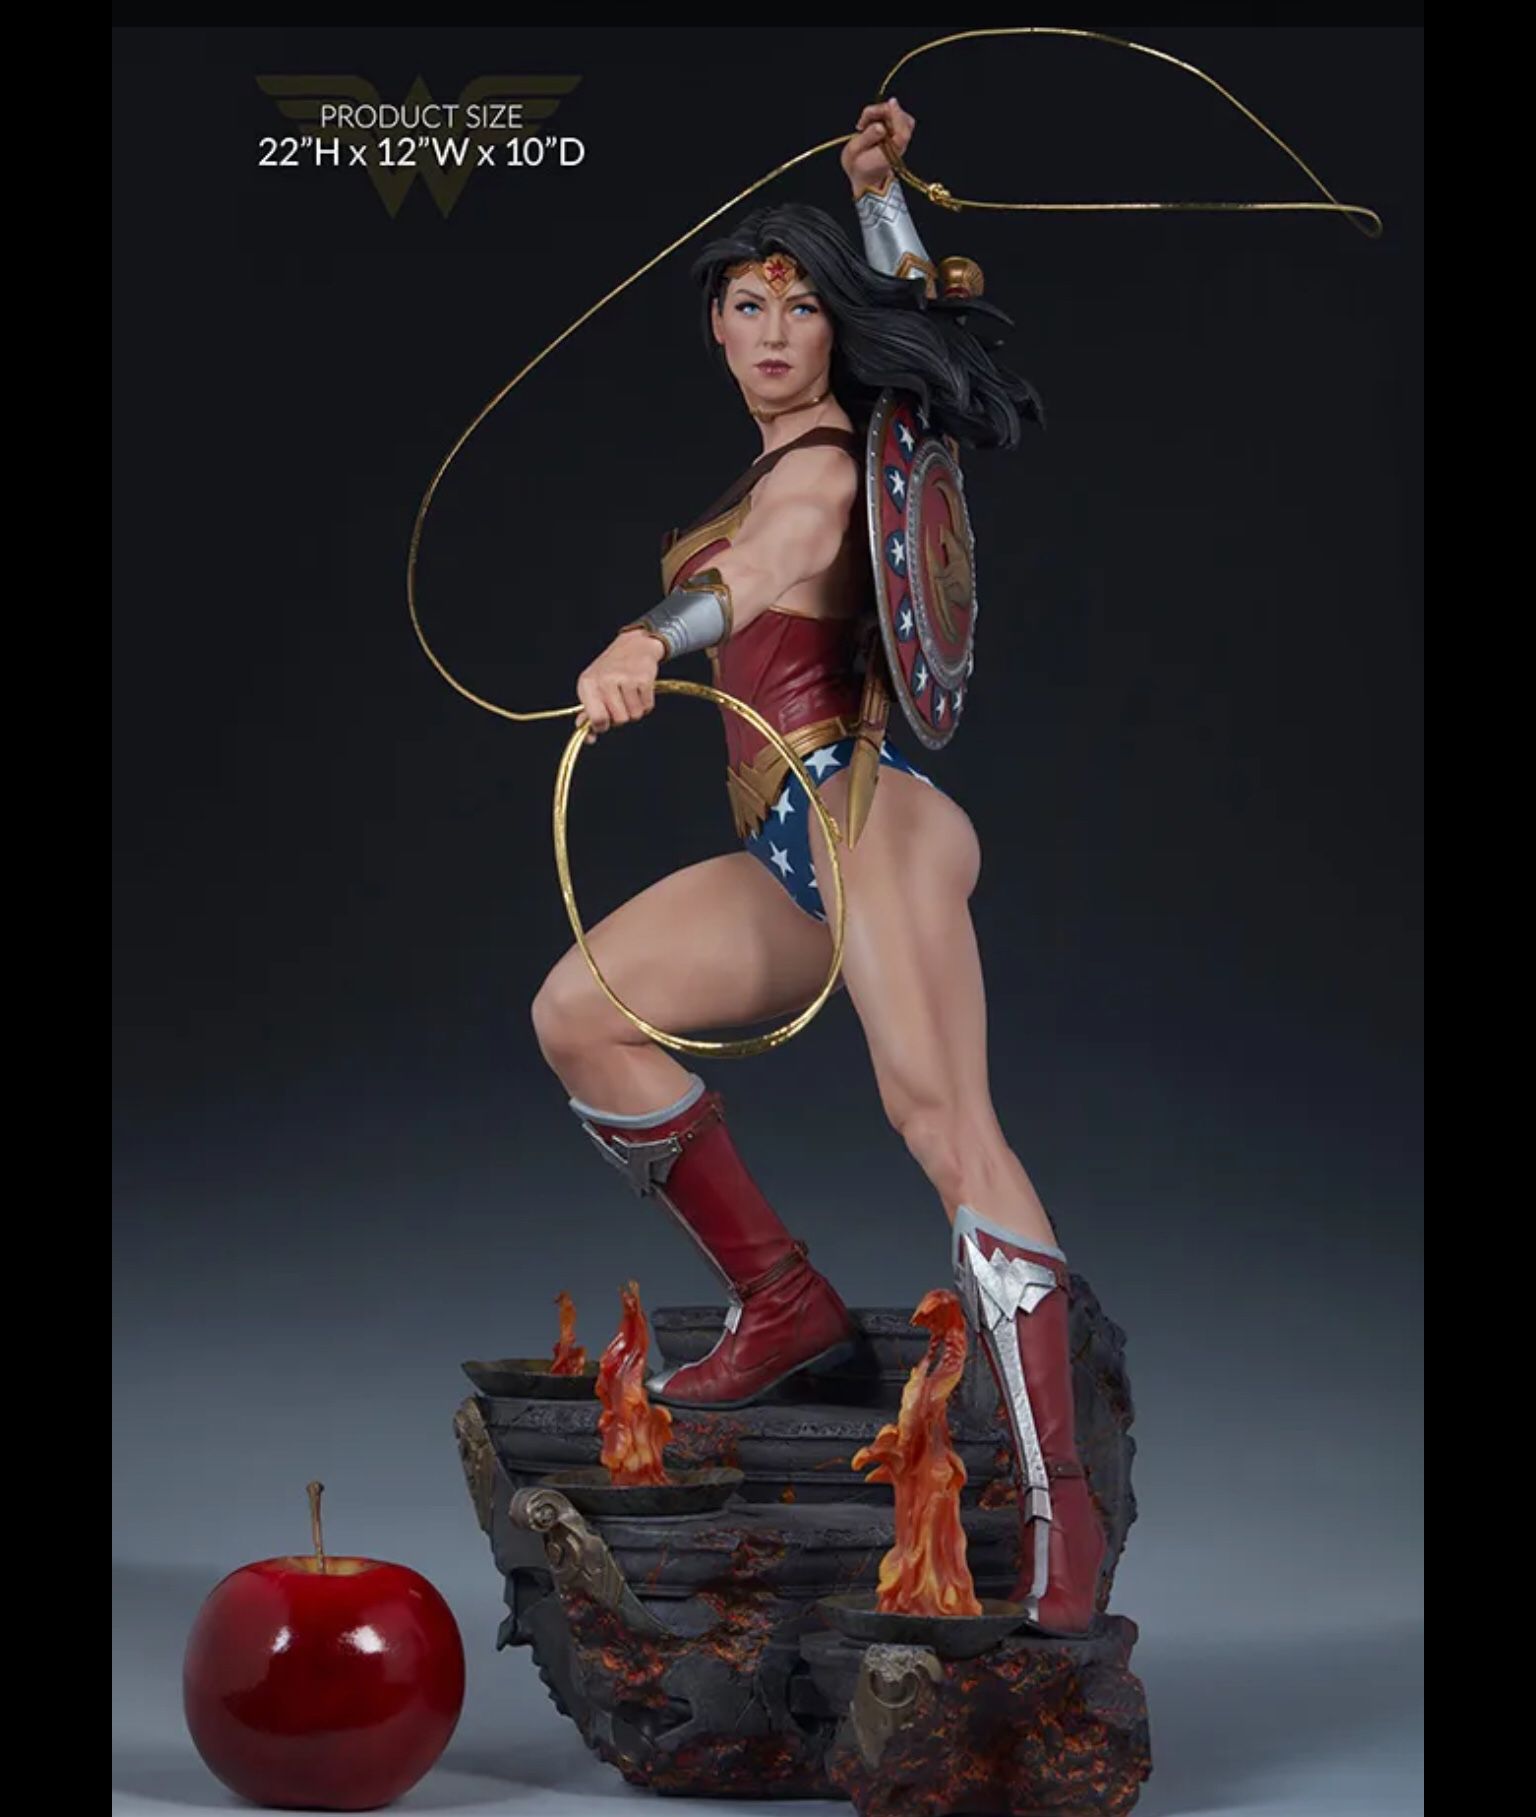 Sideshow Collectibles Exclusive Premium Format DC Wonder Woman Statue